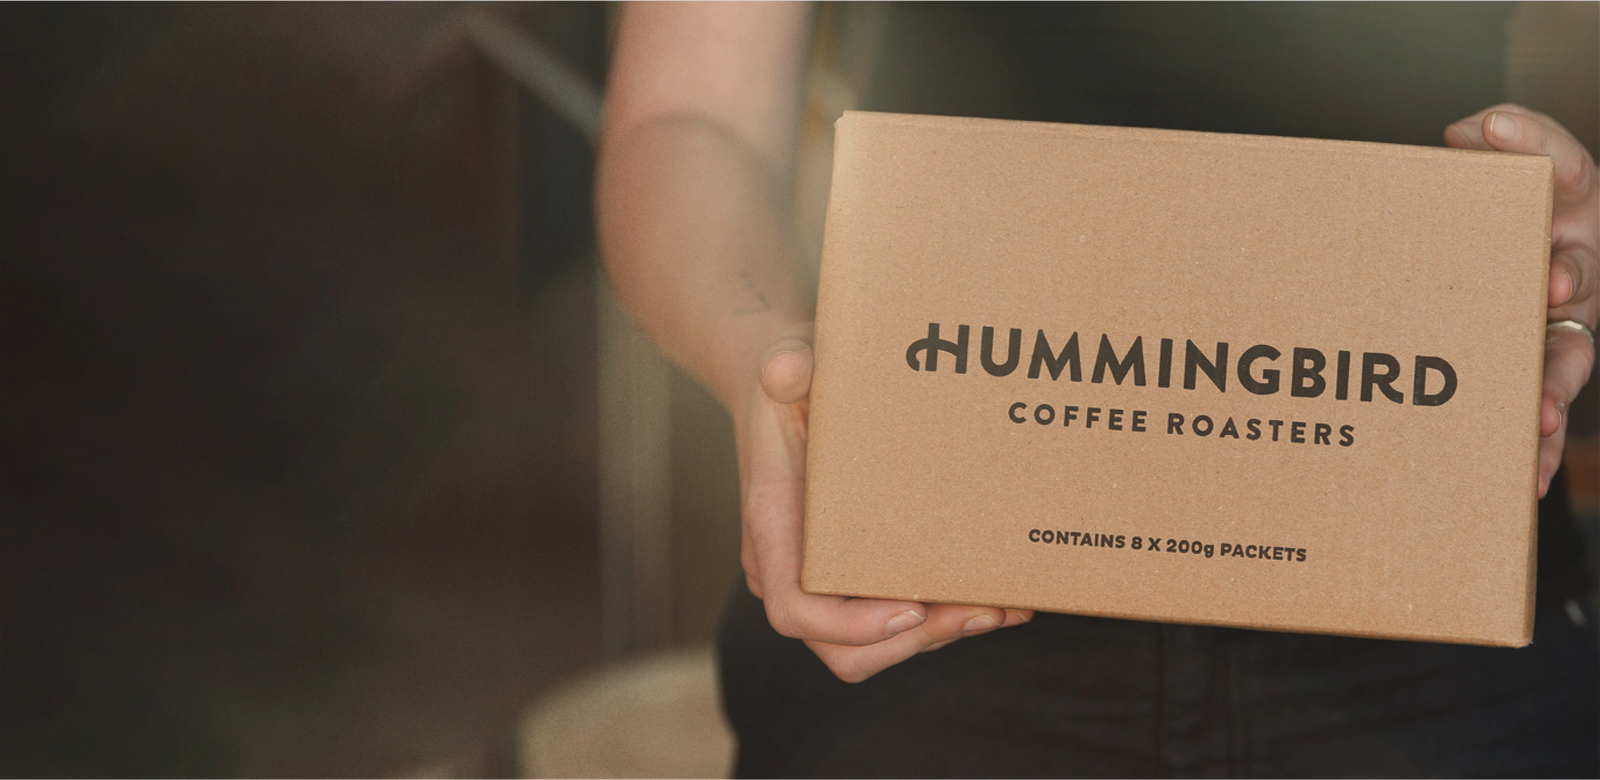 Hands holding a box of hummingbird coffee